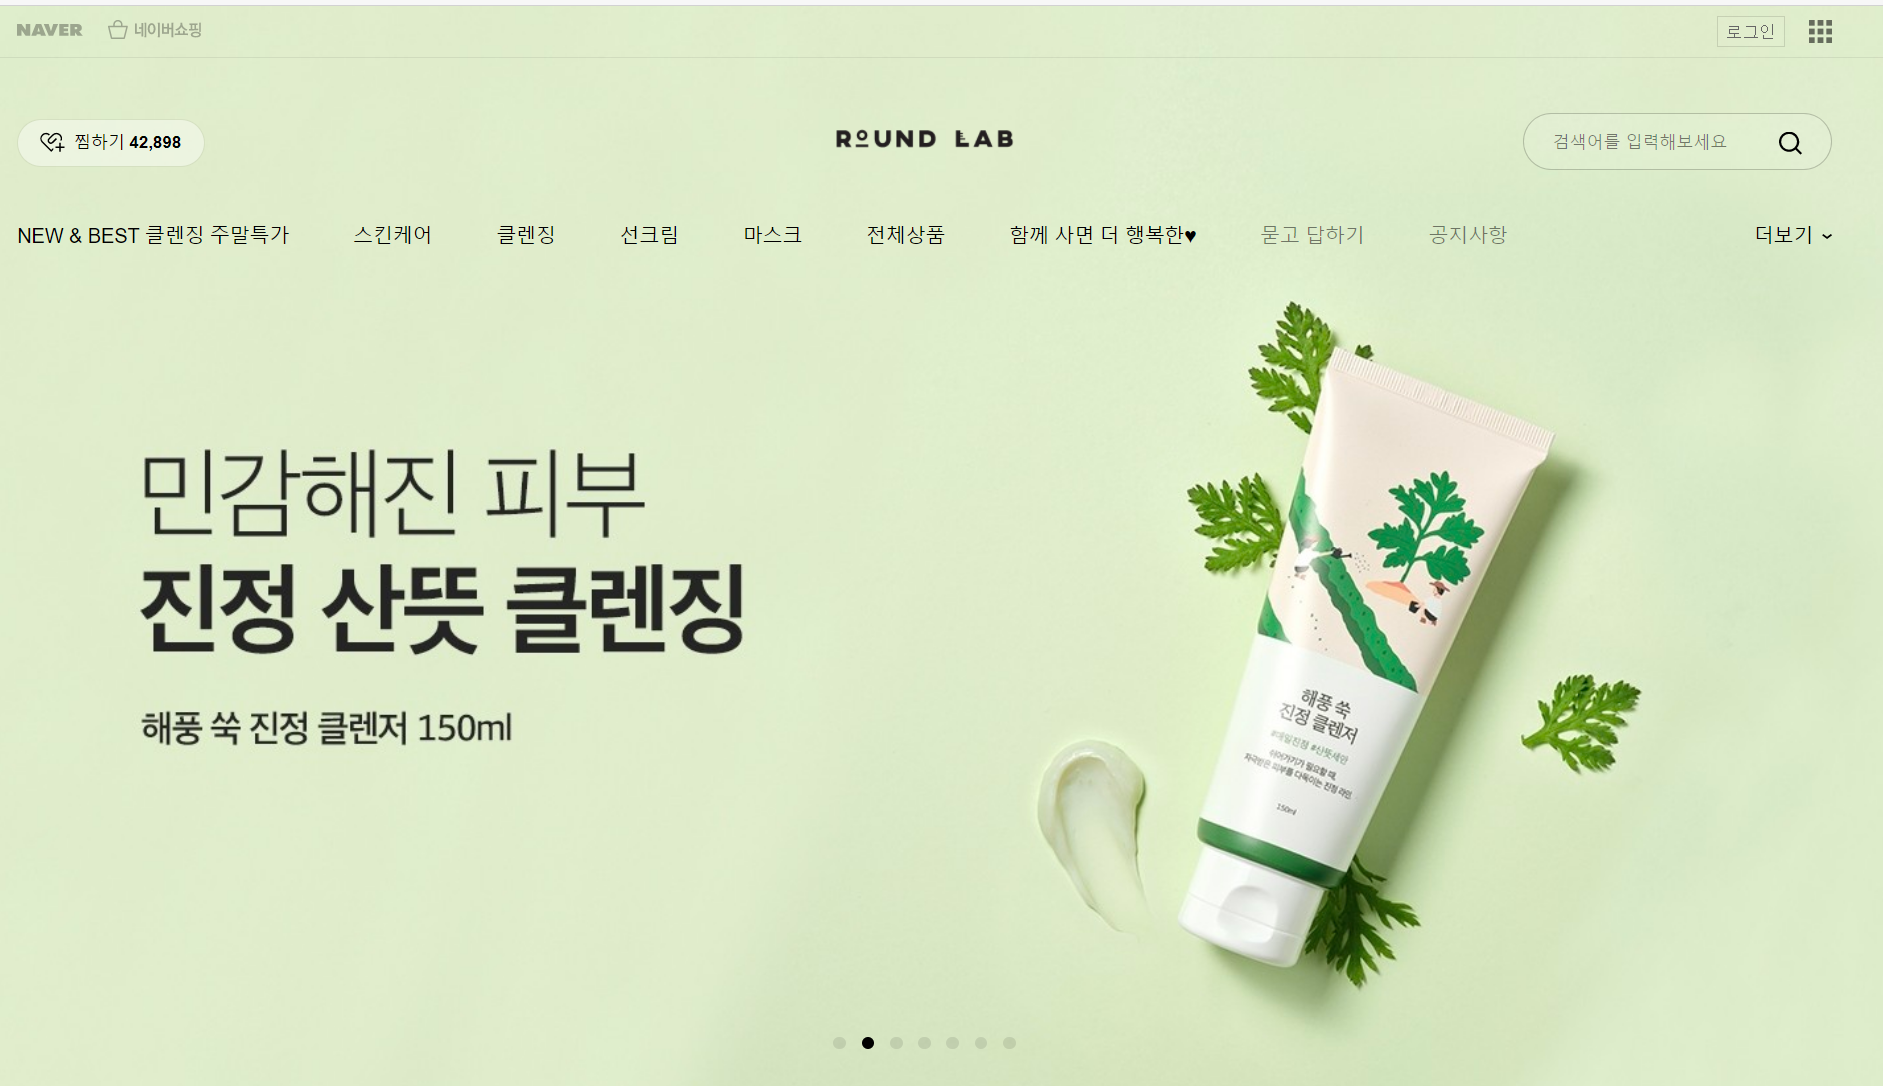 round lab - shop korea skincare